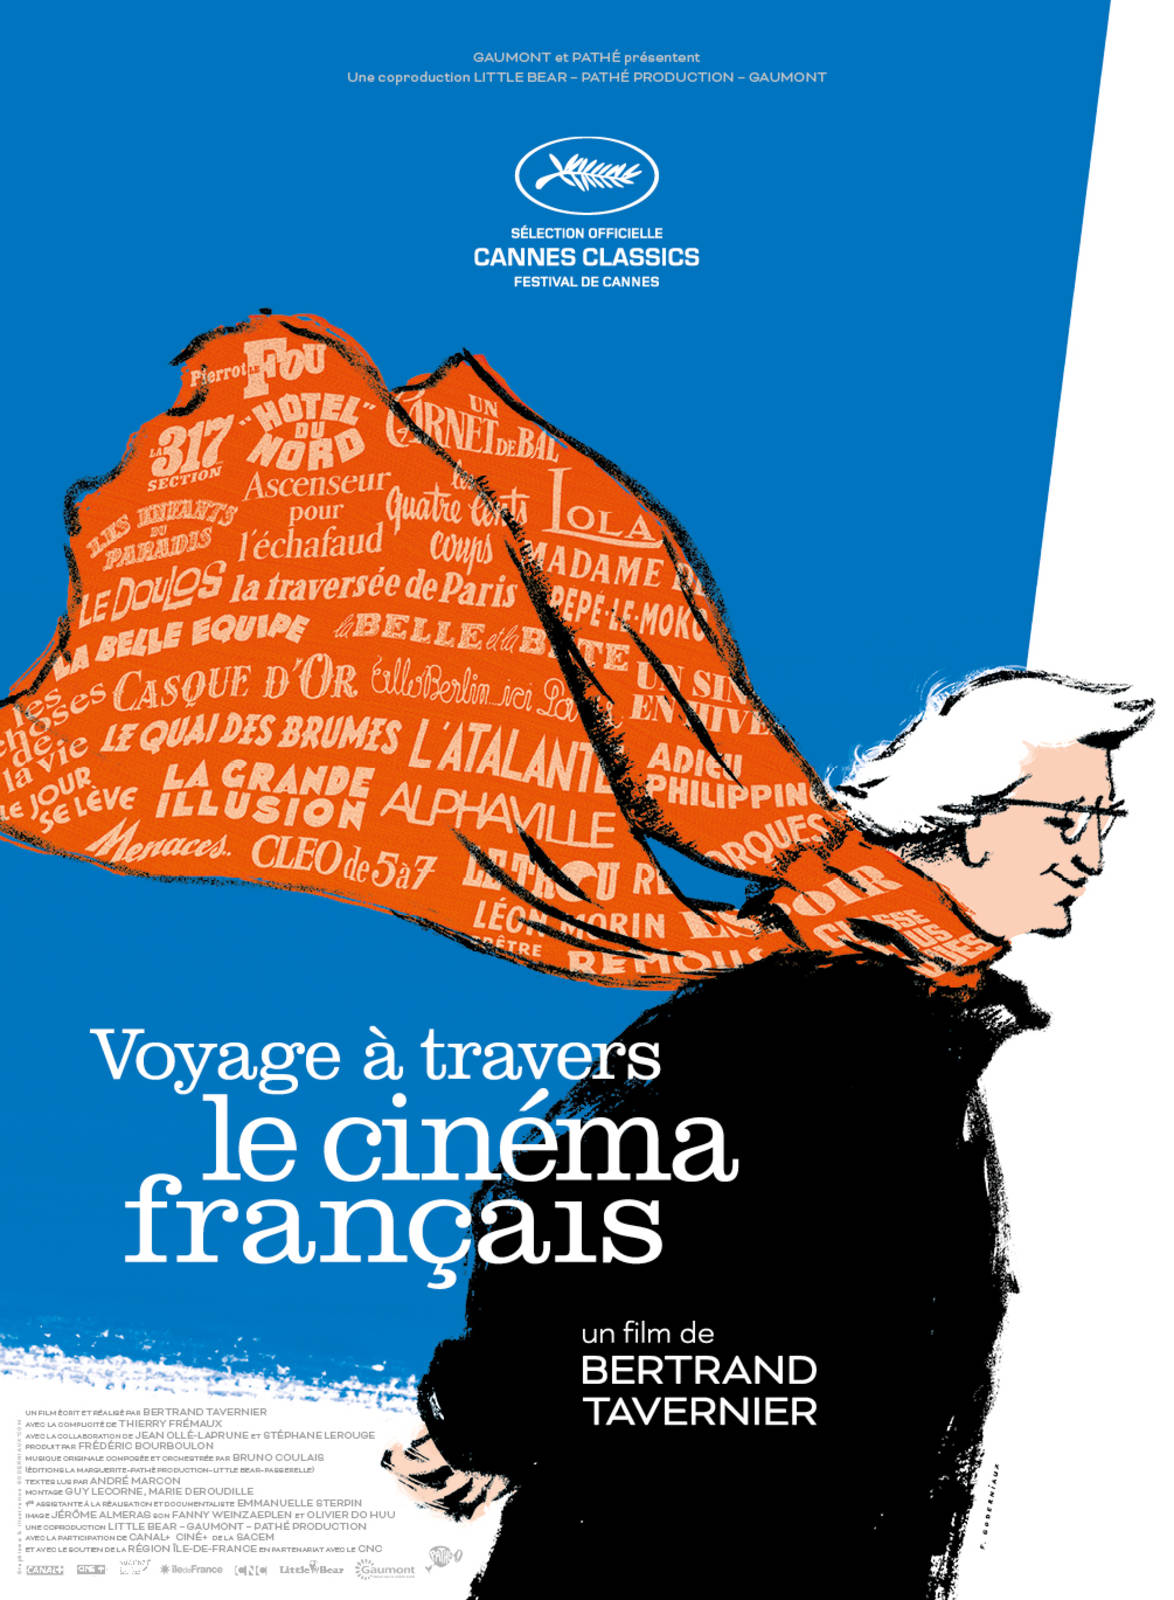 My journey through french cinema